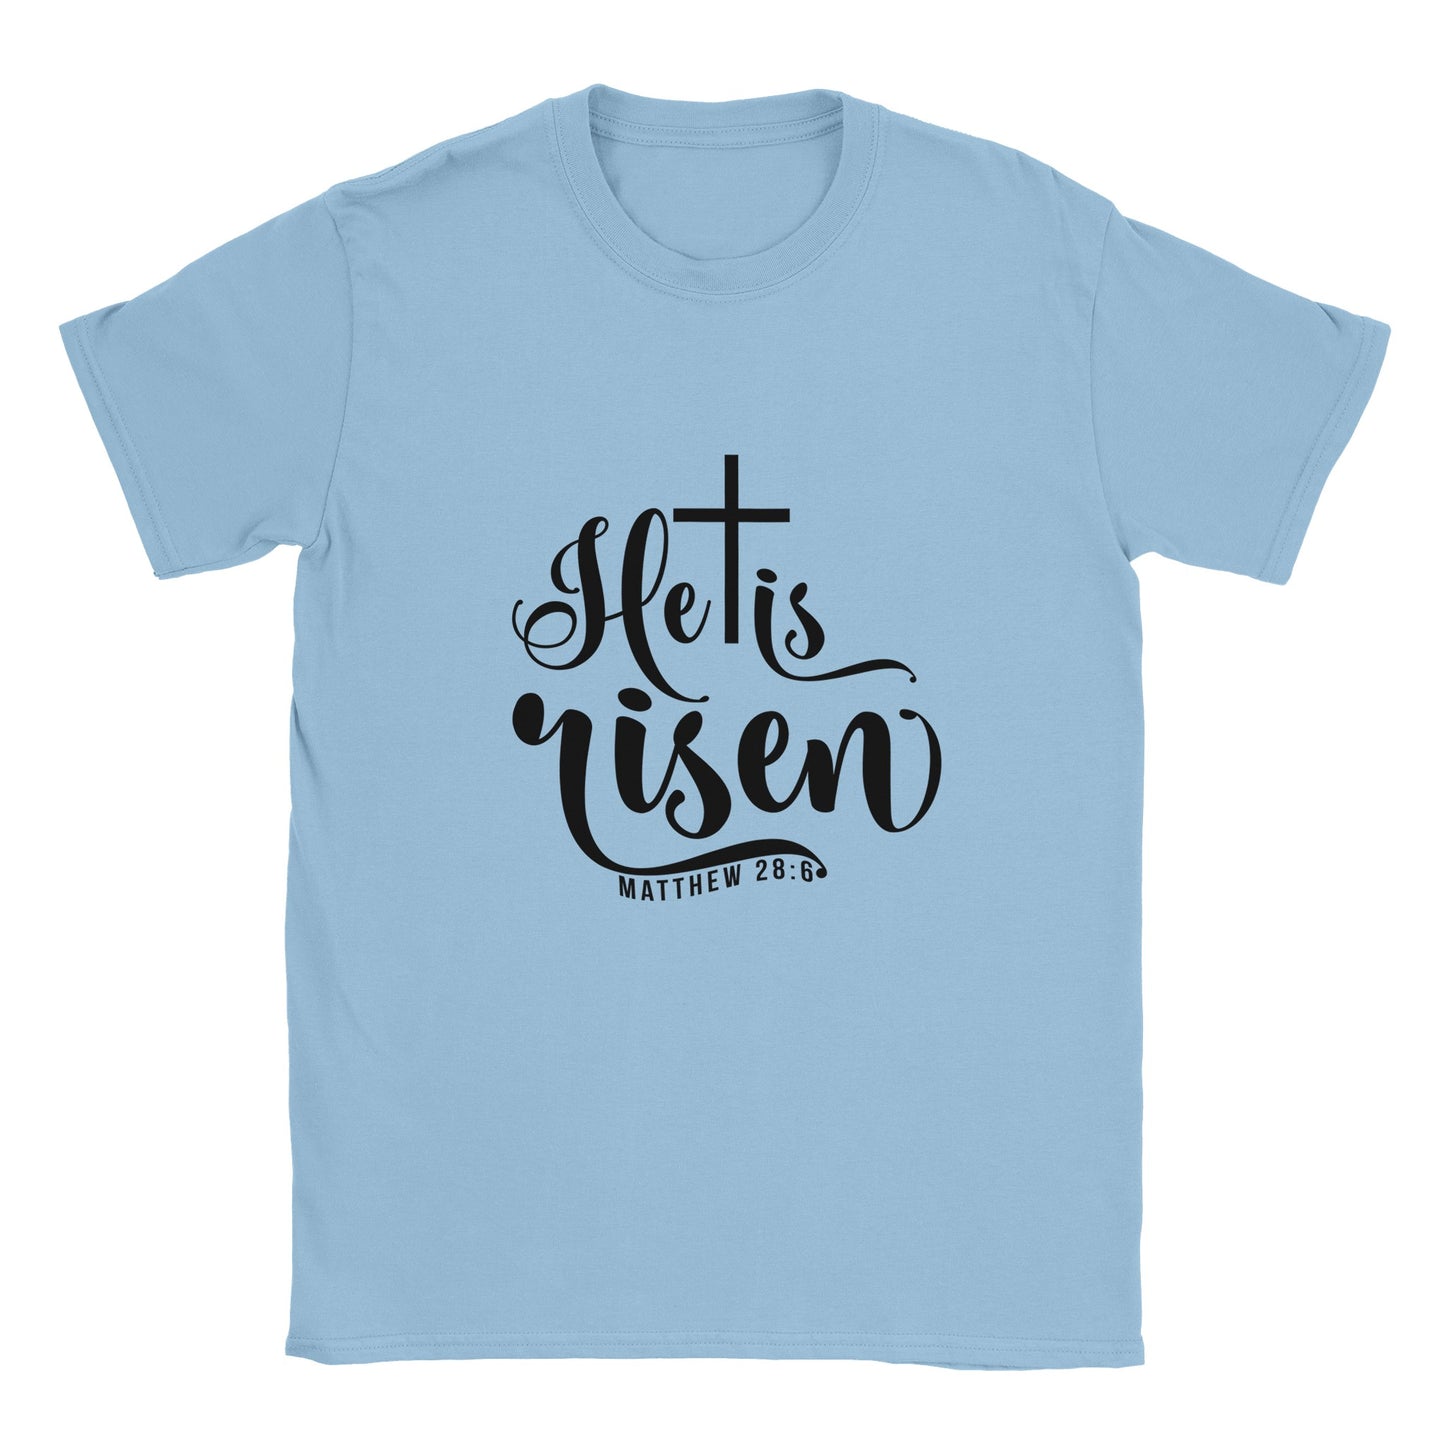 He is Risen (Matthew 20:6) - Classic Unisex Crewneck T-shirt